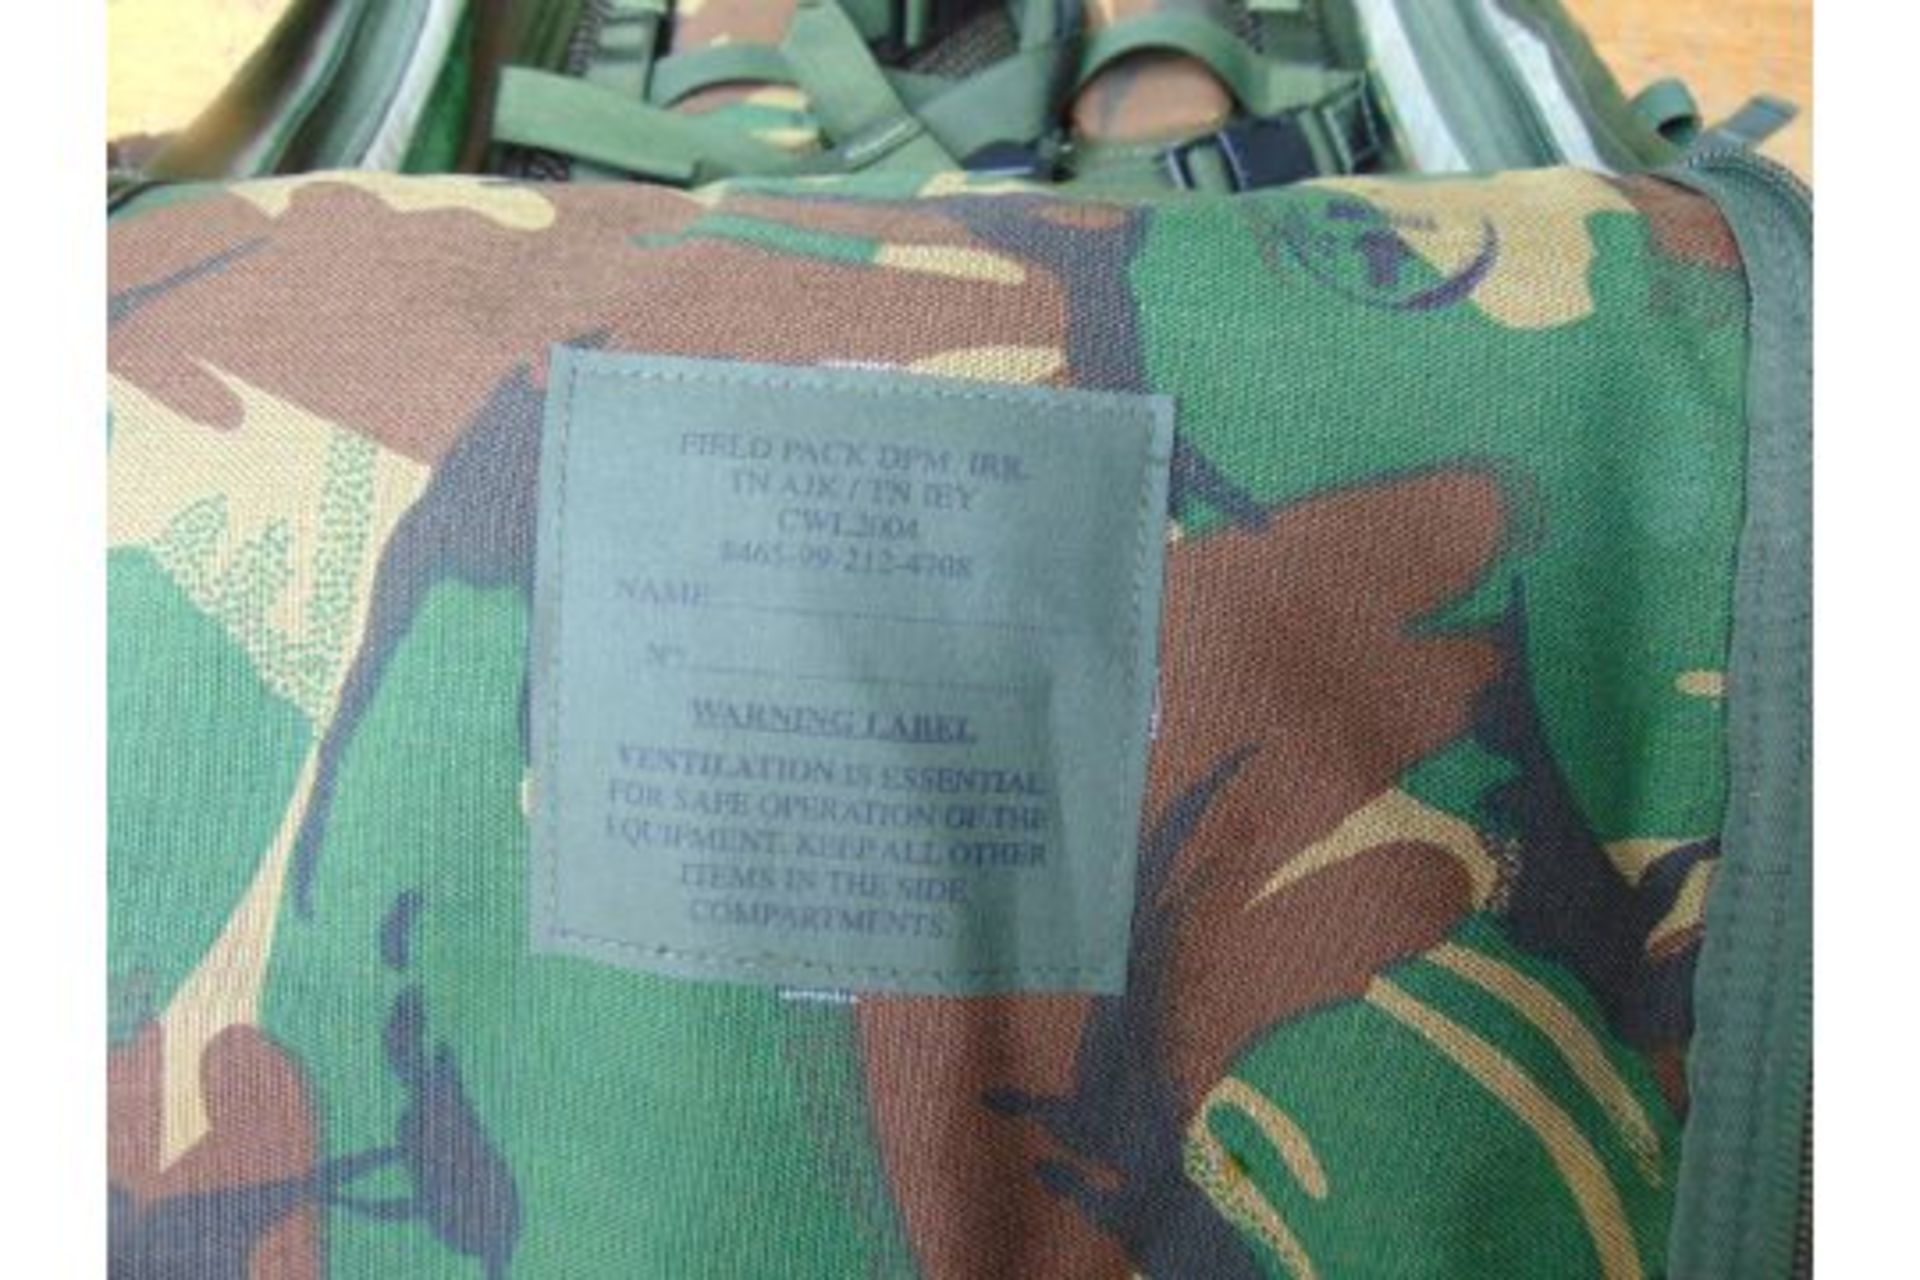 1 x New Unissued British Army DPM Rucksack - Image 6 of 6